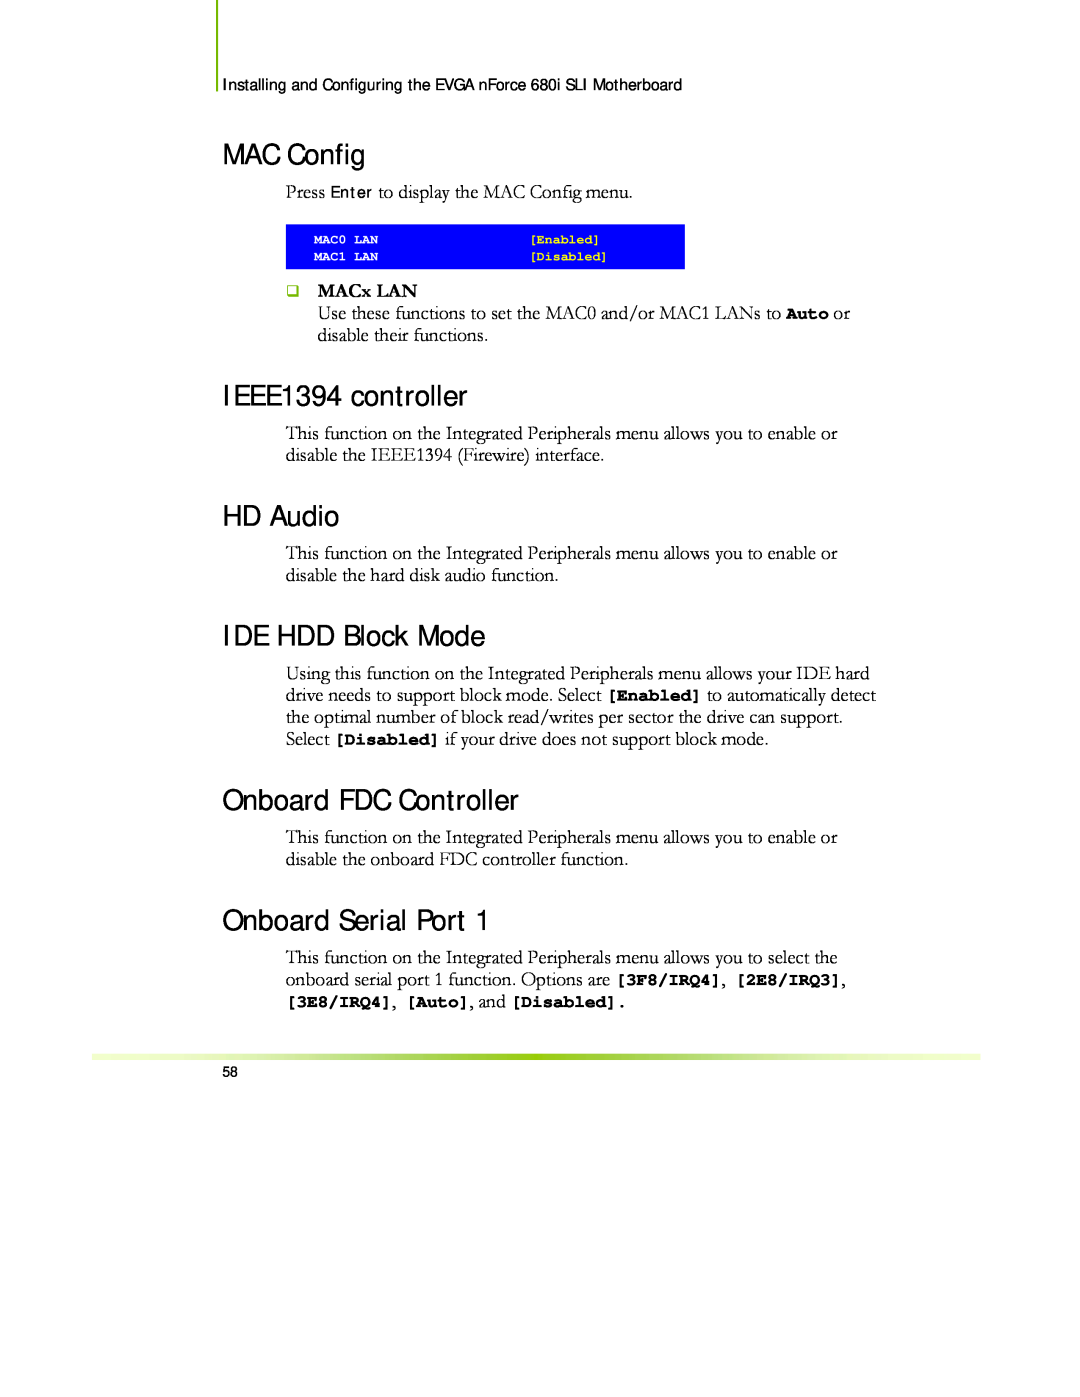 EVGA 122-CK-NF68-XX MAC Config, IEEE1394 controller, HD Audio, IDE HDD Block Mode, Onboard FDC Controller, ‰ MACx LAN 